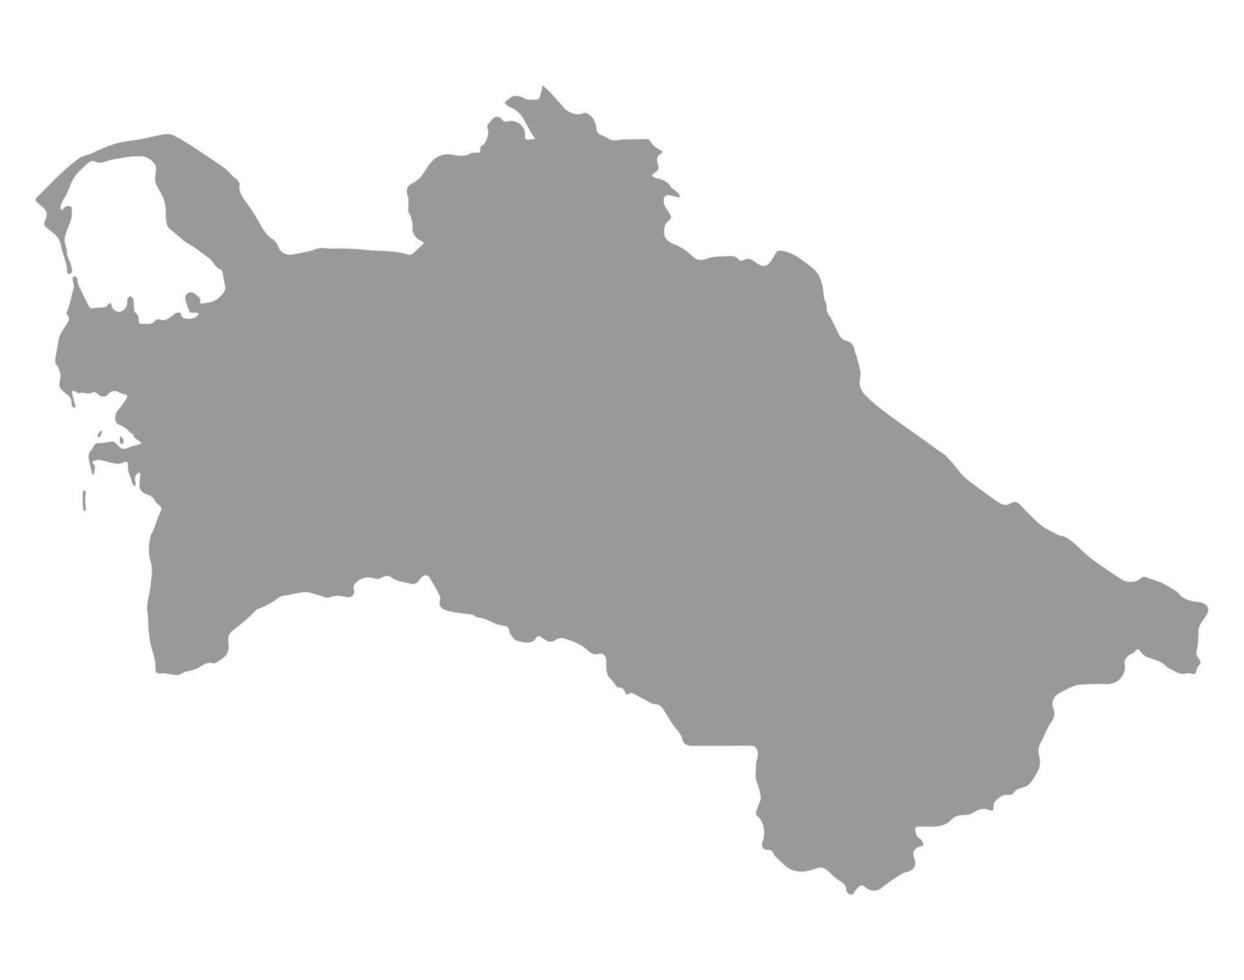 mapa de turkmenistán en png o fondo transparente. símbolo de turkmenistán. ilustración vectorial vector